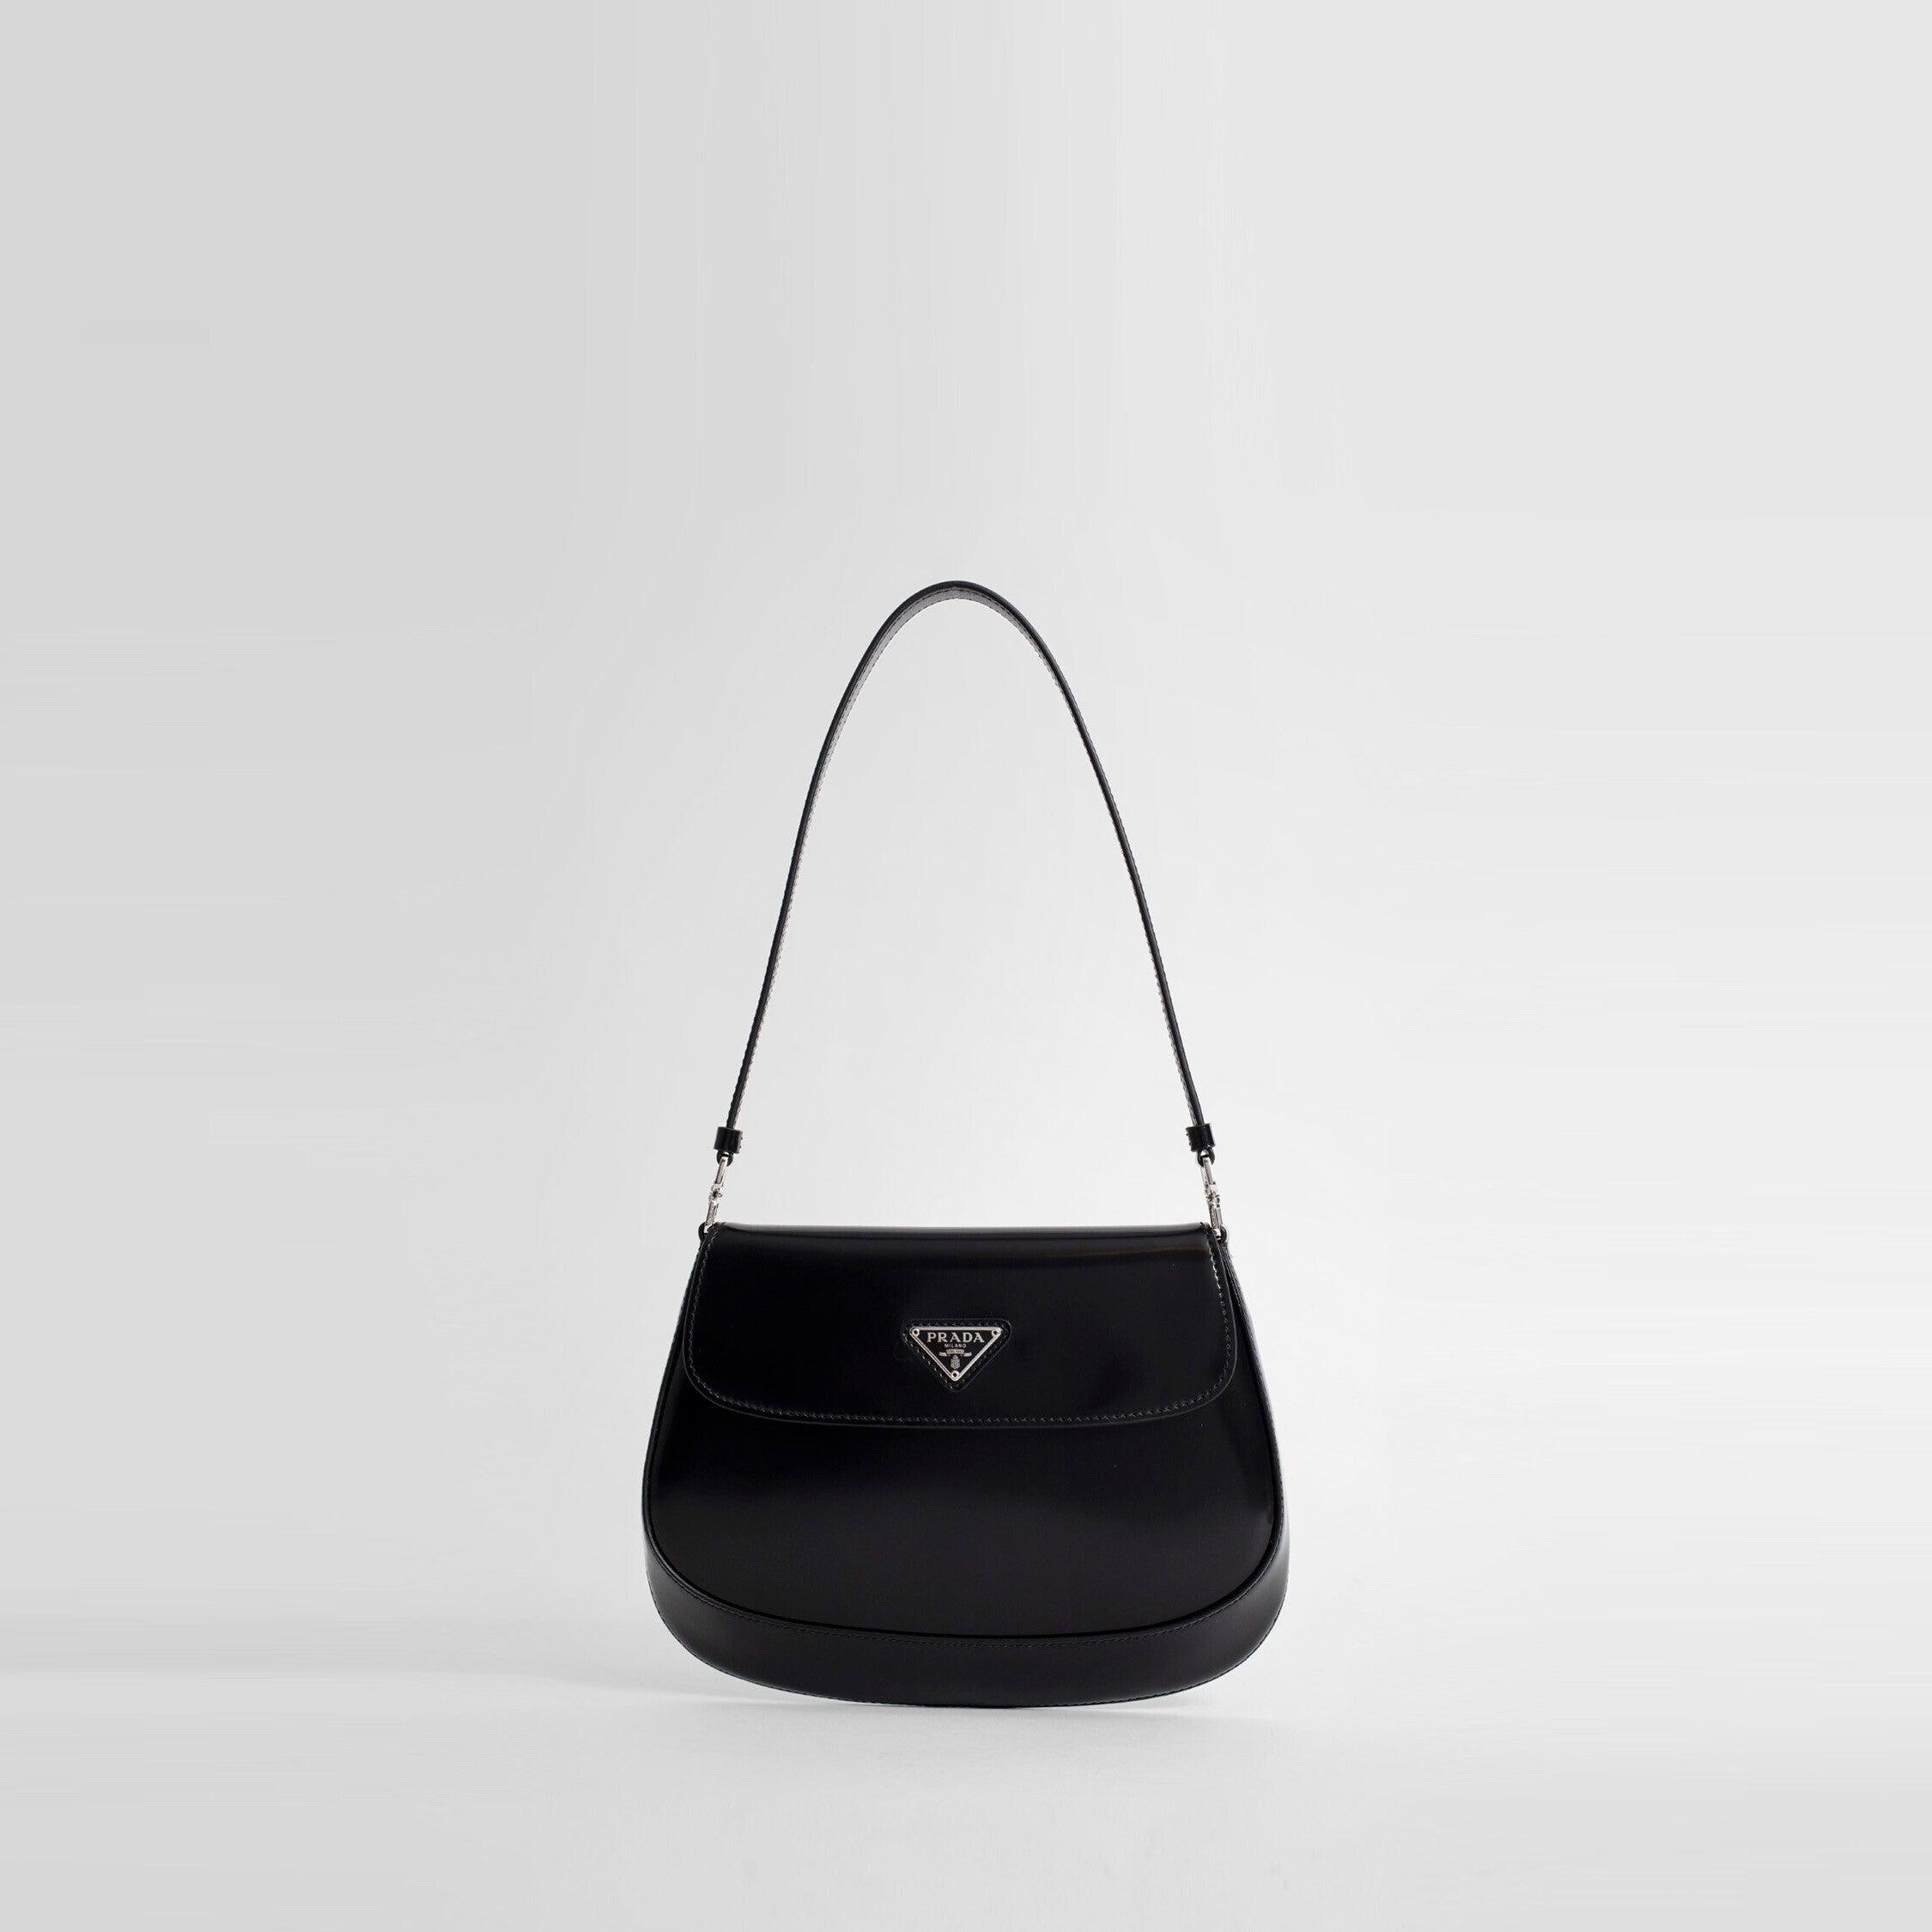 Prada Women's Black Cleo Mini Bag - Size One Size - Bags & Luggage